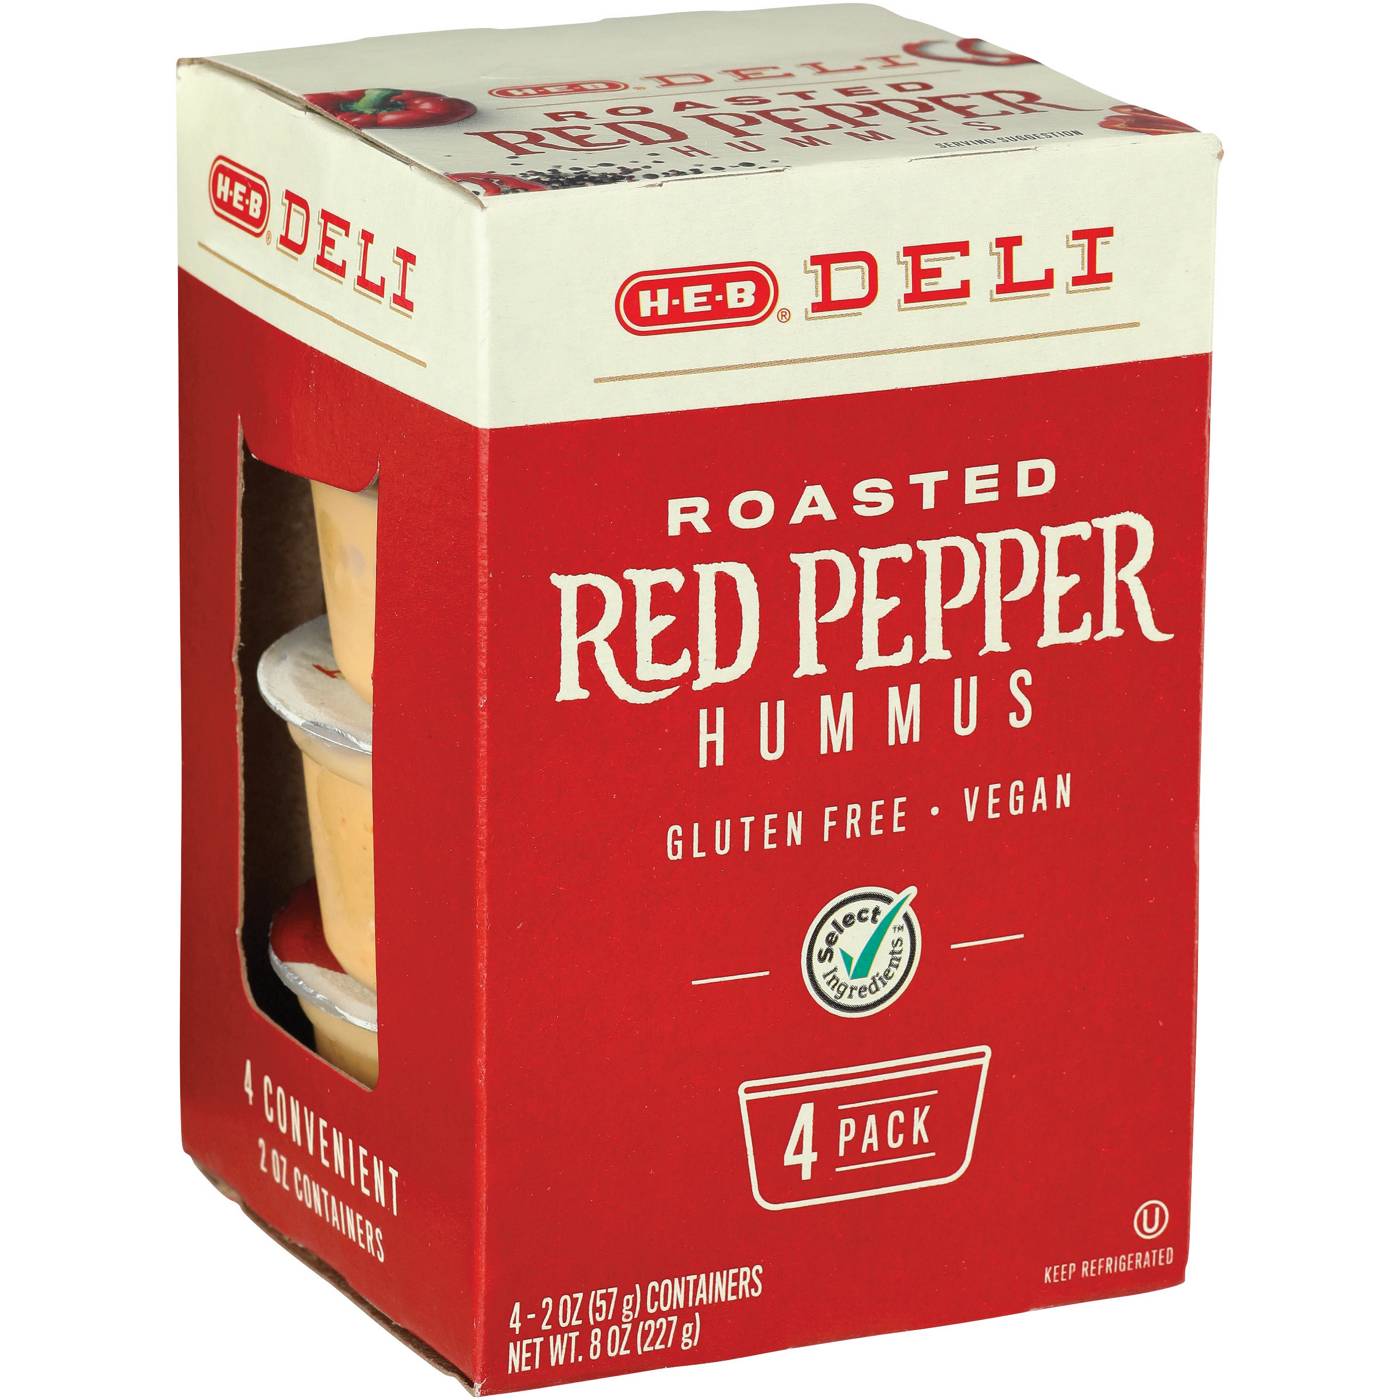 Roasted Red Bell Pepper Powder 4 oz Bag